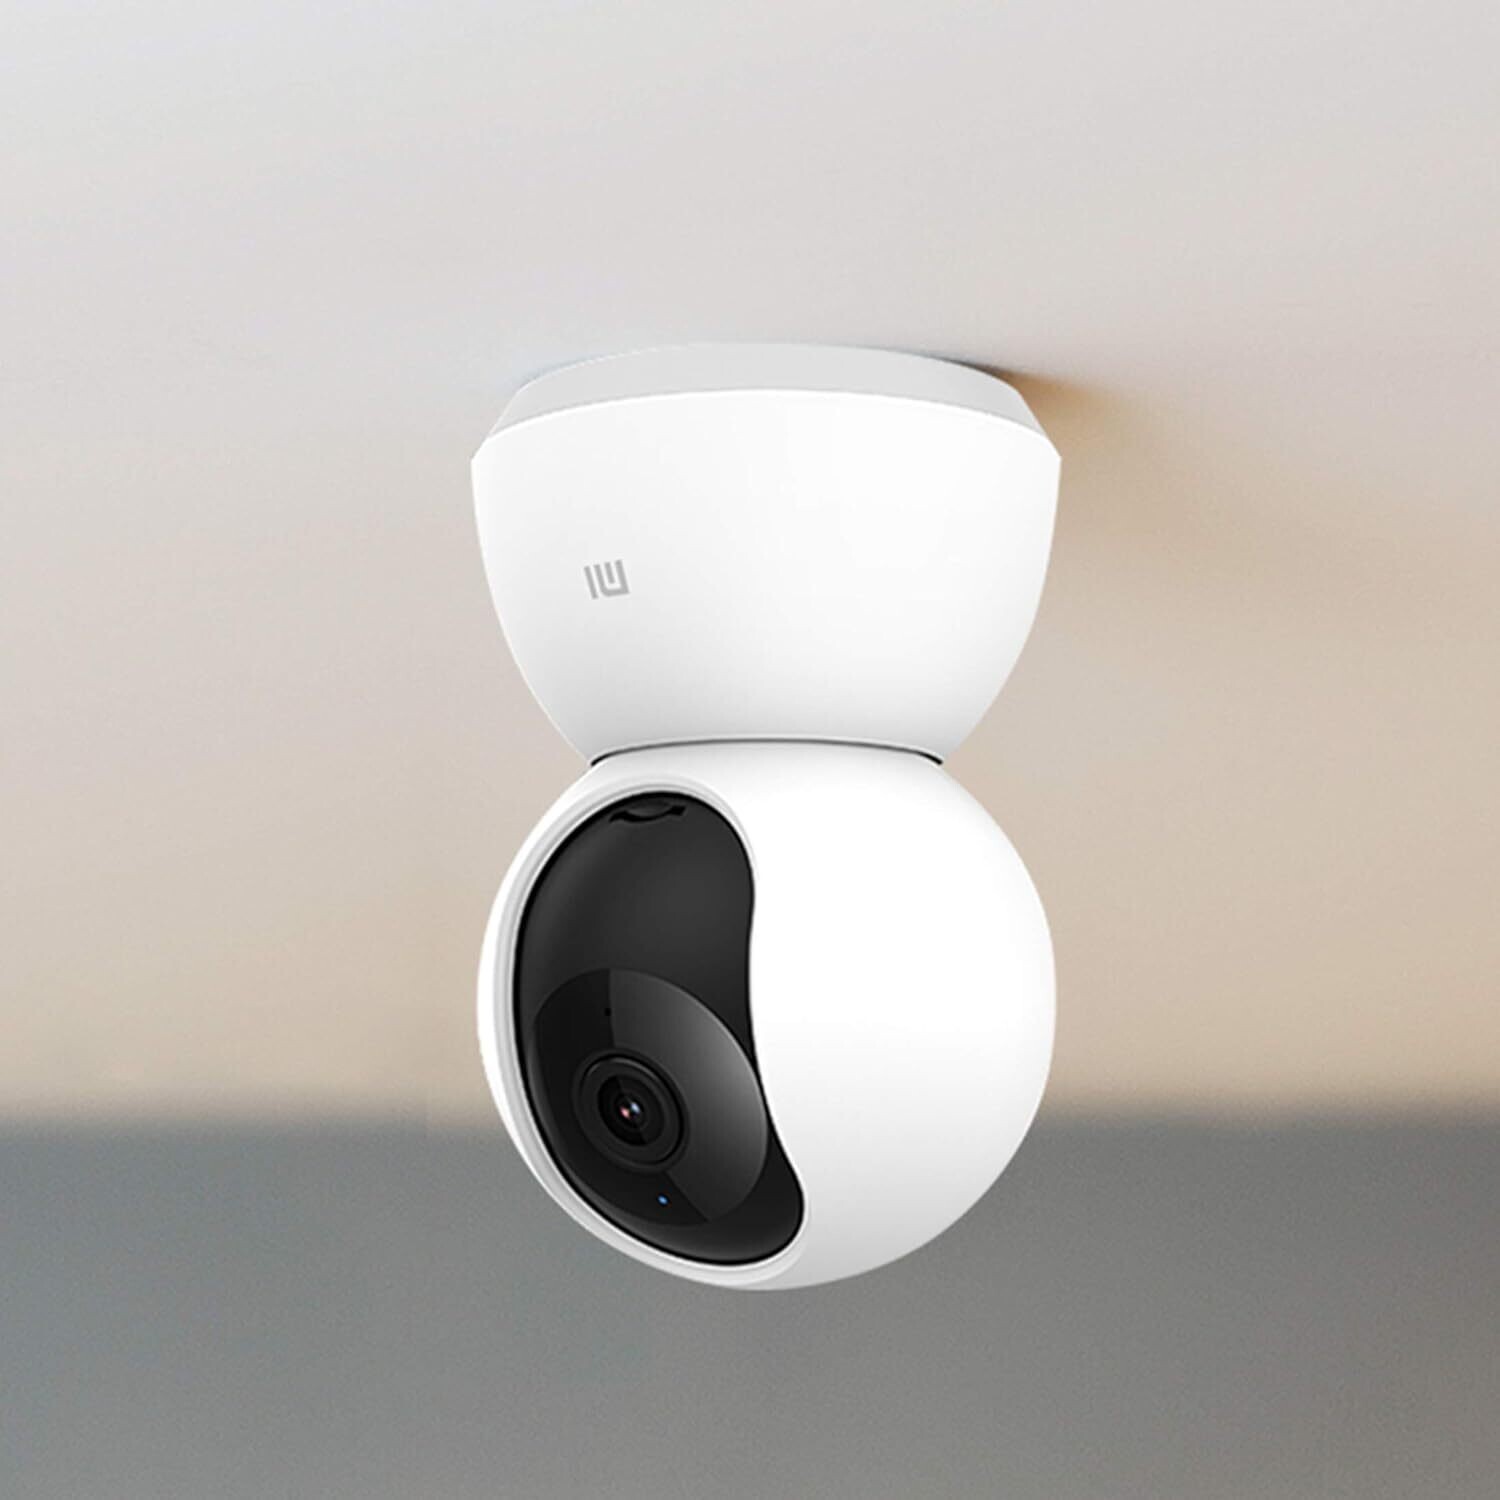 Xiaomi Mi 360° Home Security Camera 2K, Mi Smart IP Camera 2K 360 Angle Video CCTV WiFi Night Vision Wireless Webcam Surveillance Camera Baby Monitor, White